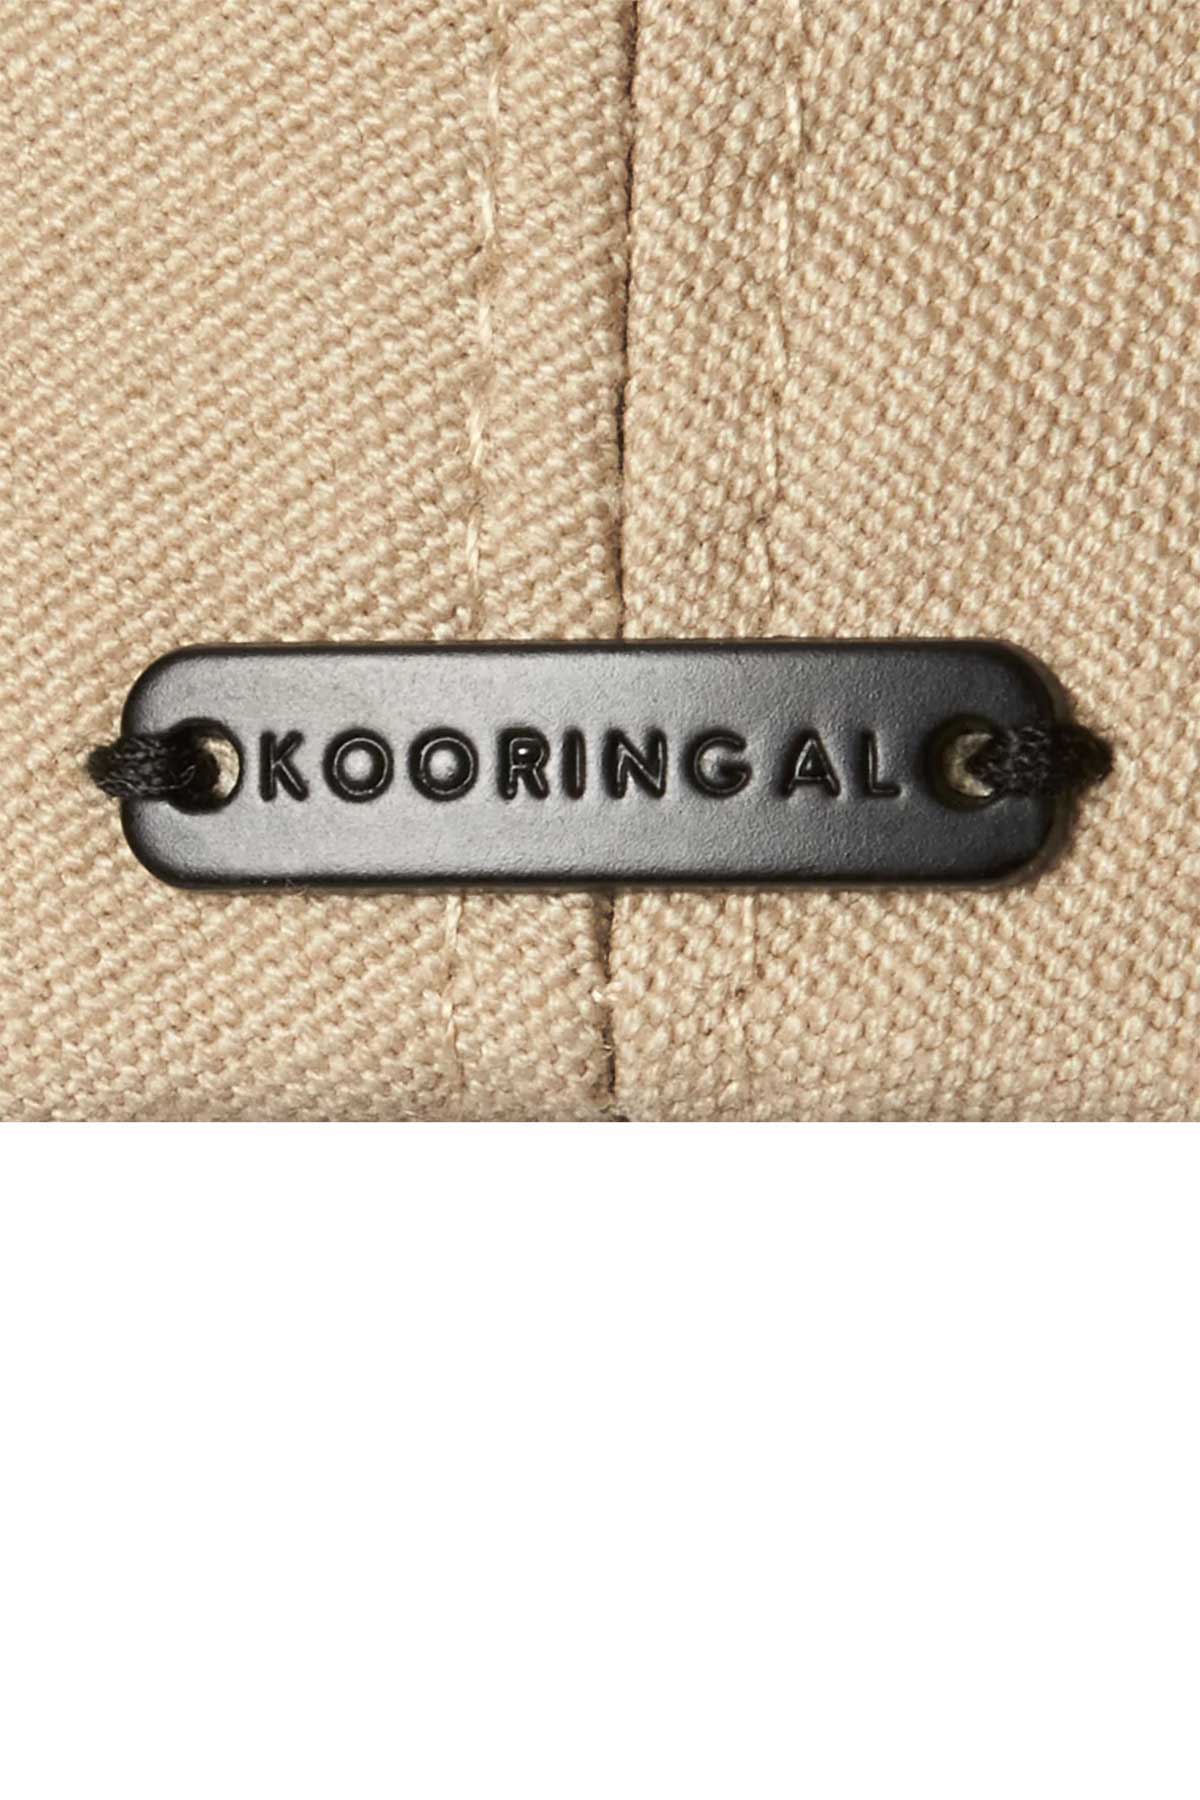 Kooringal Driver cap - Baker badge on camel cap